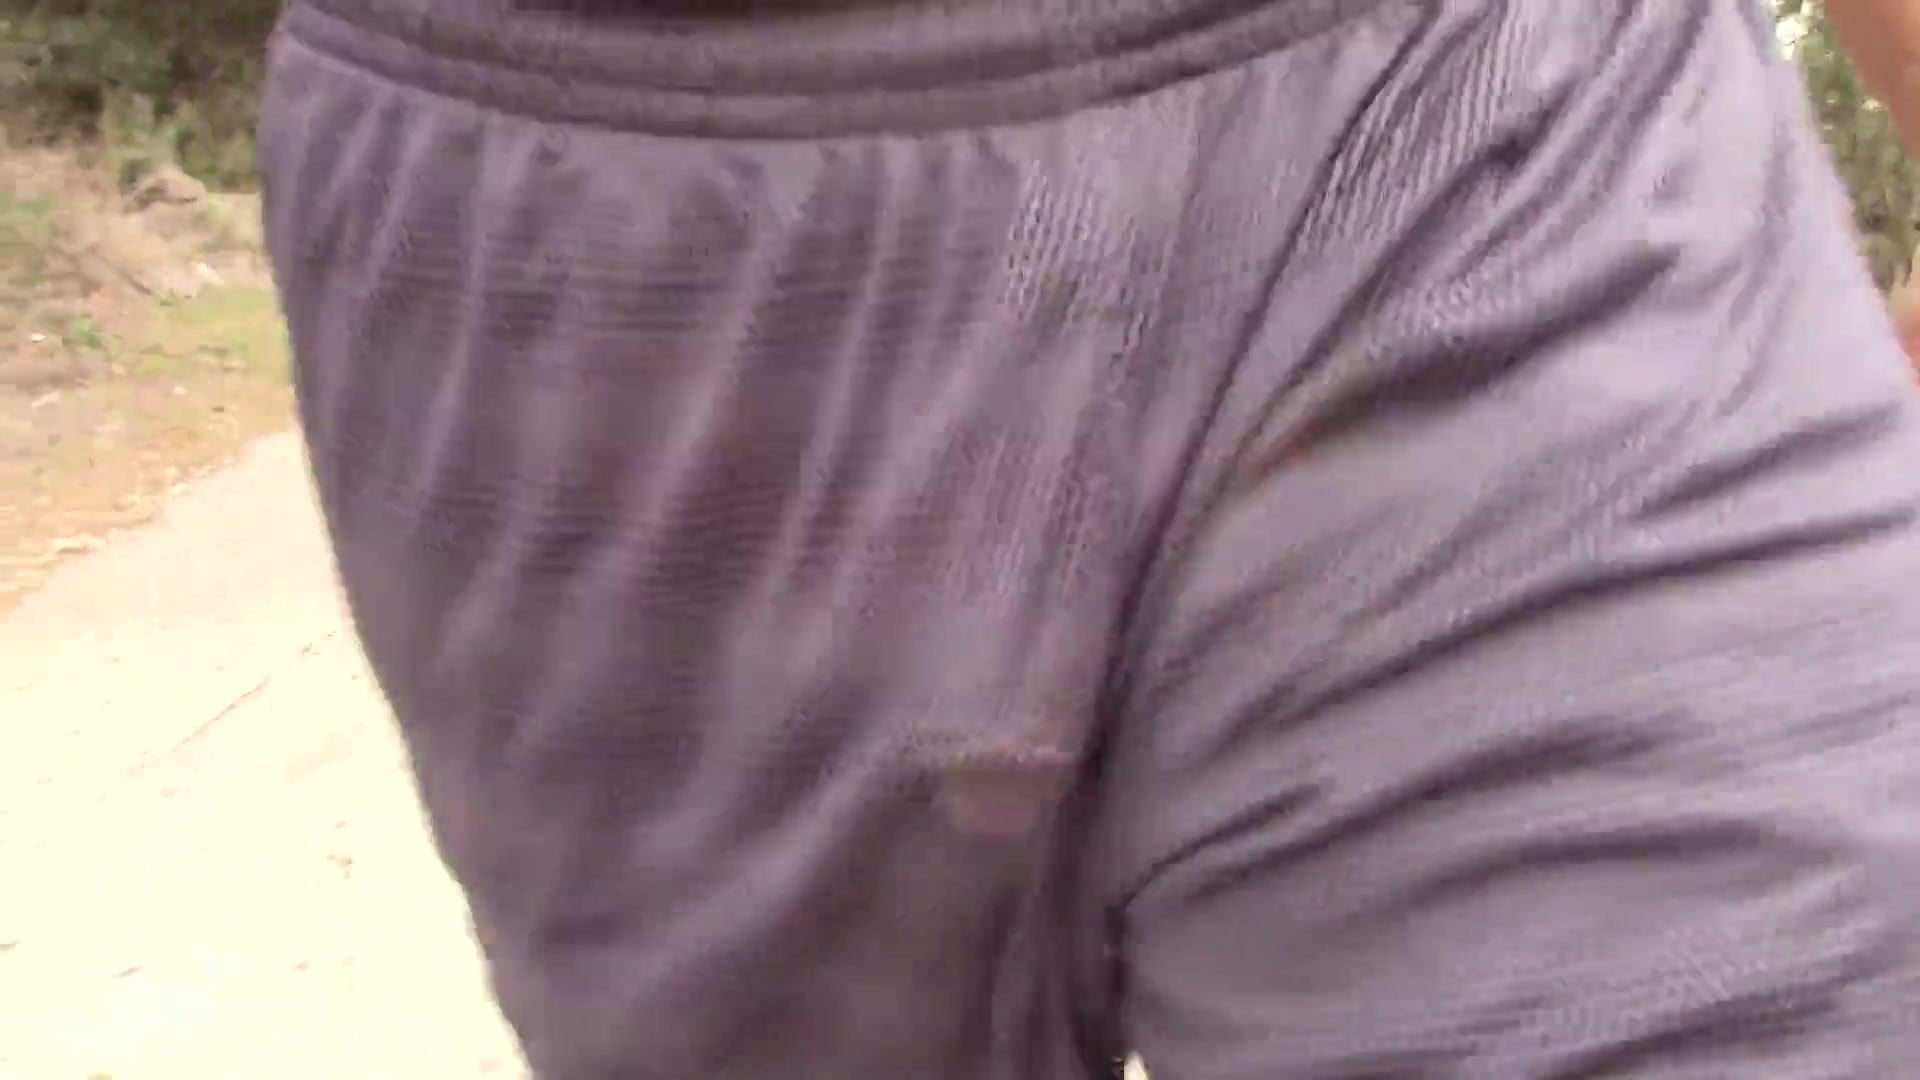 Freeballing Outdoors in Back Mesh Shorts, Free Man Porn 99 xHamster.